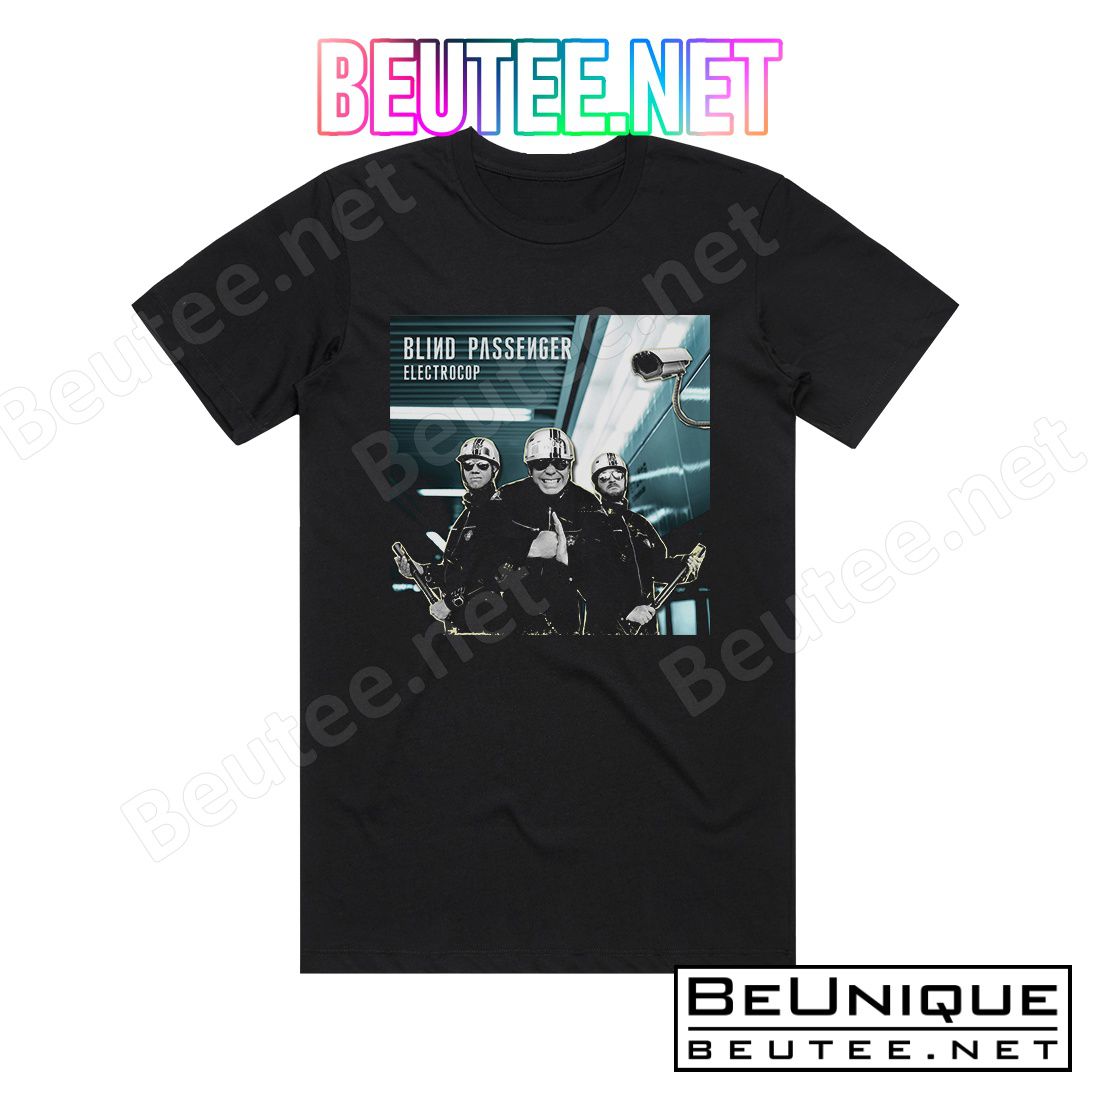 Blind Passenger Electrocop Album Cover T-Shirt